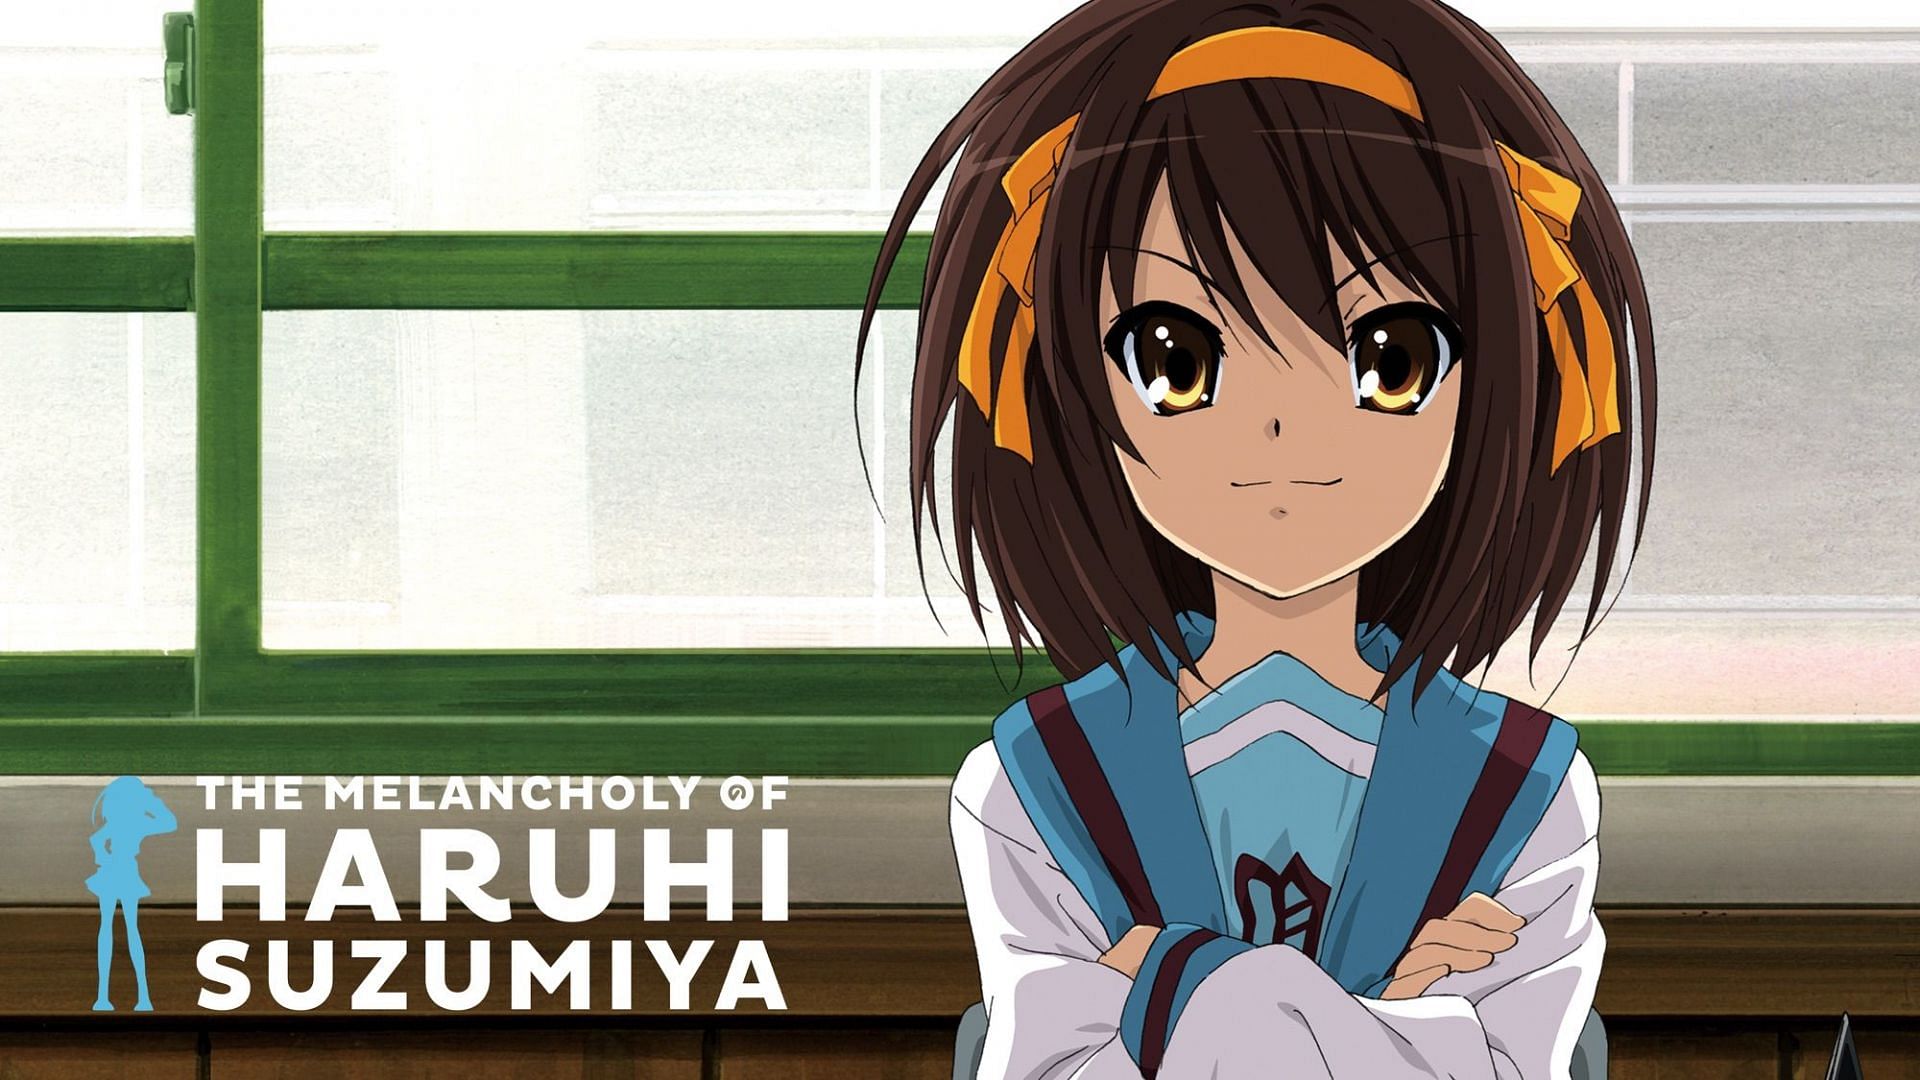 Haruhi Suzumiya (Image via Kyoto Animation)